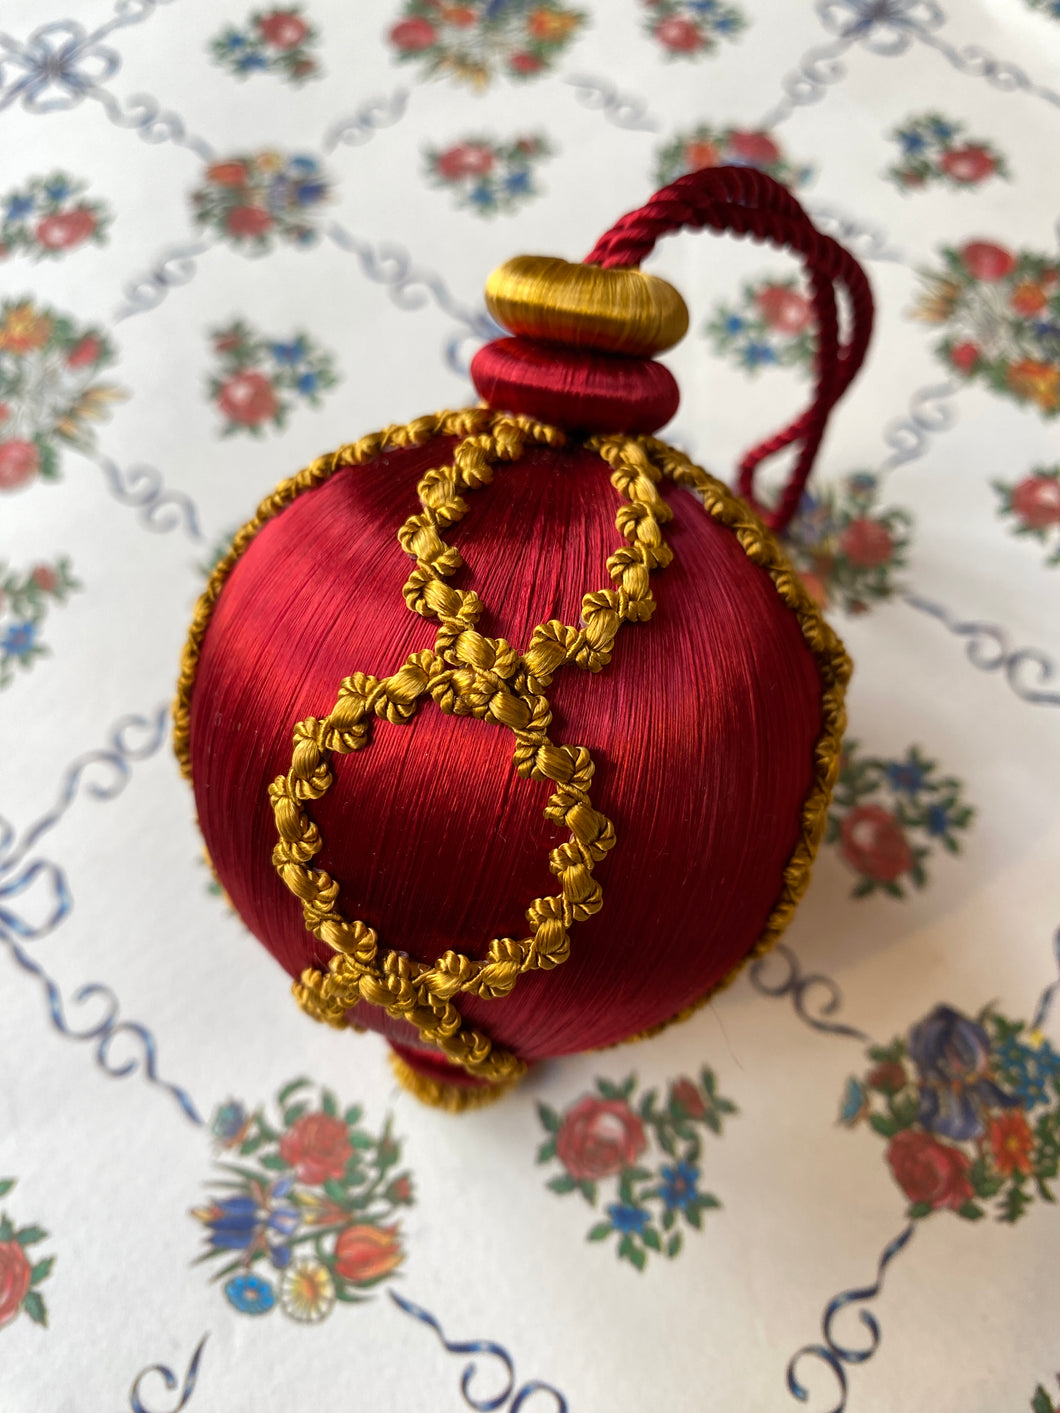 Handmade Christmas ornament / ハンドメイド クリスマスオーナメント / Boule de Noël fait a la main